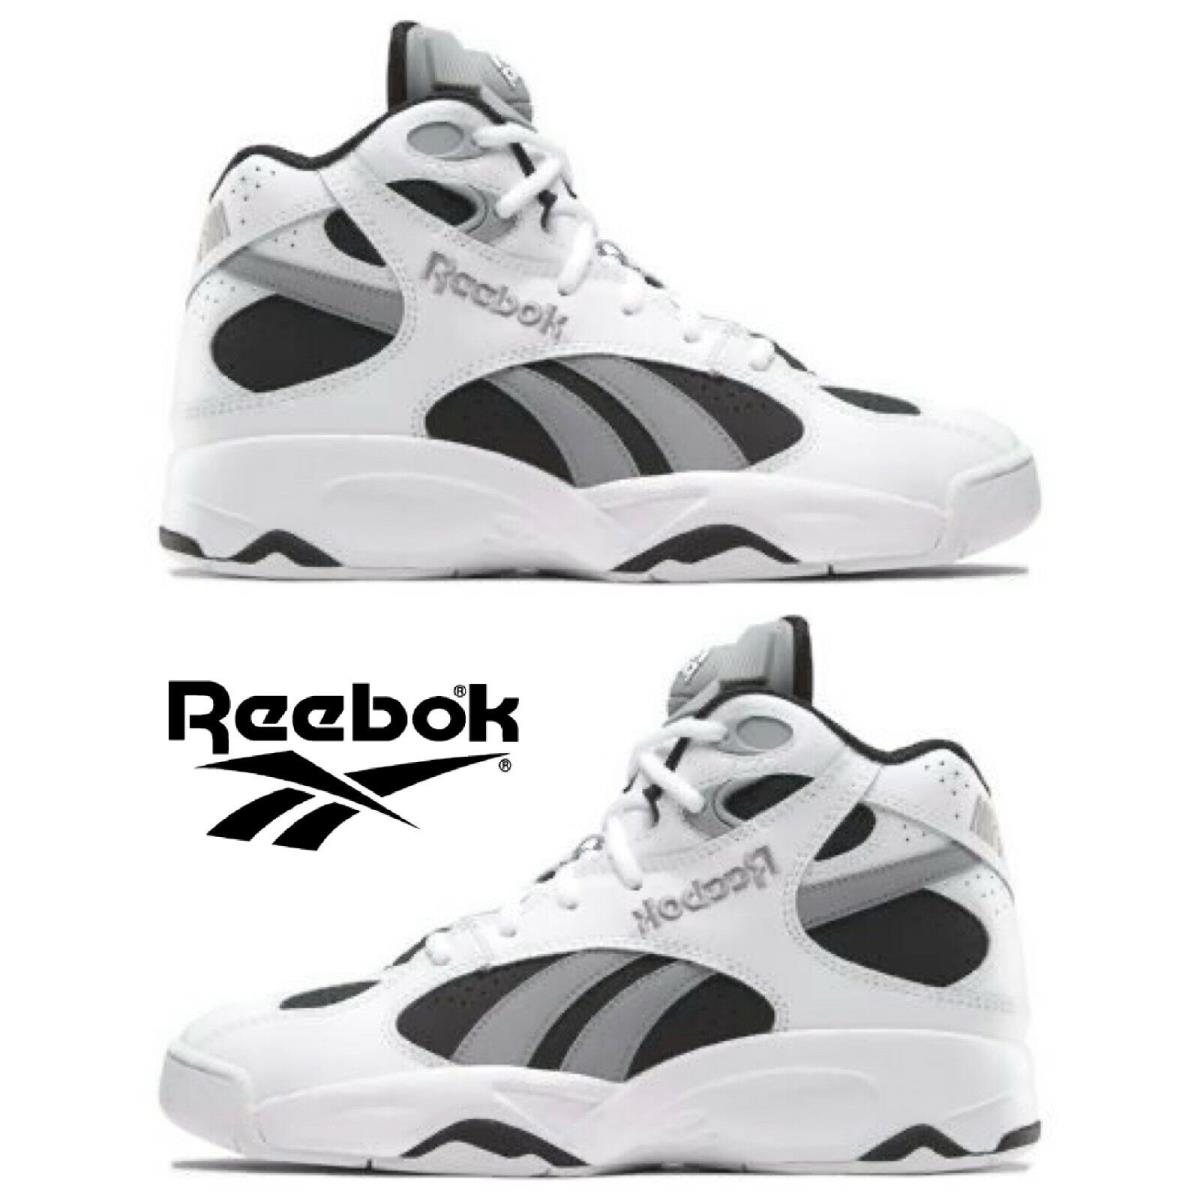 Reebok Atr Pump Vertical Basketball Shoes Men`s Sneakers Running Black White - White, Manufacturer: Ftwr White / Core Black / Pure Grey 4